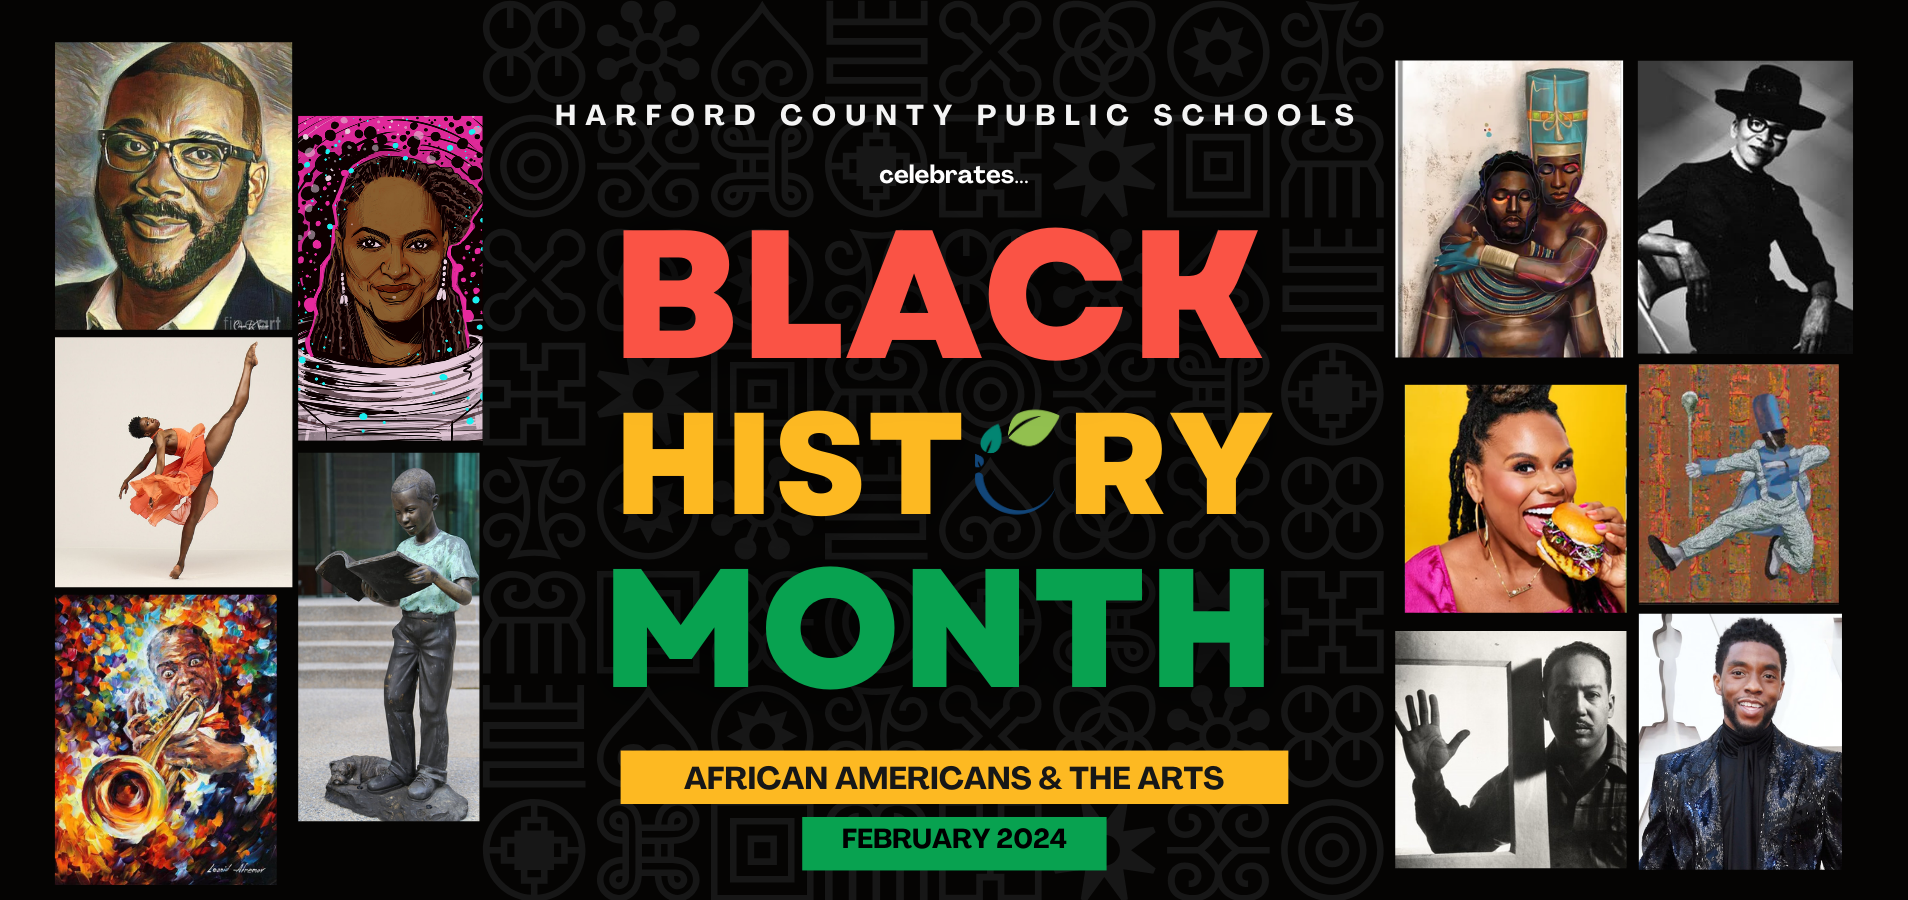 HCPS Celebrates Black History Month, February 1-29, 2024